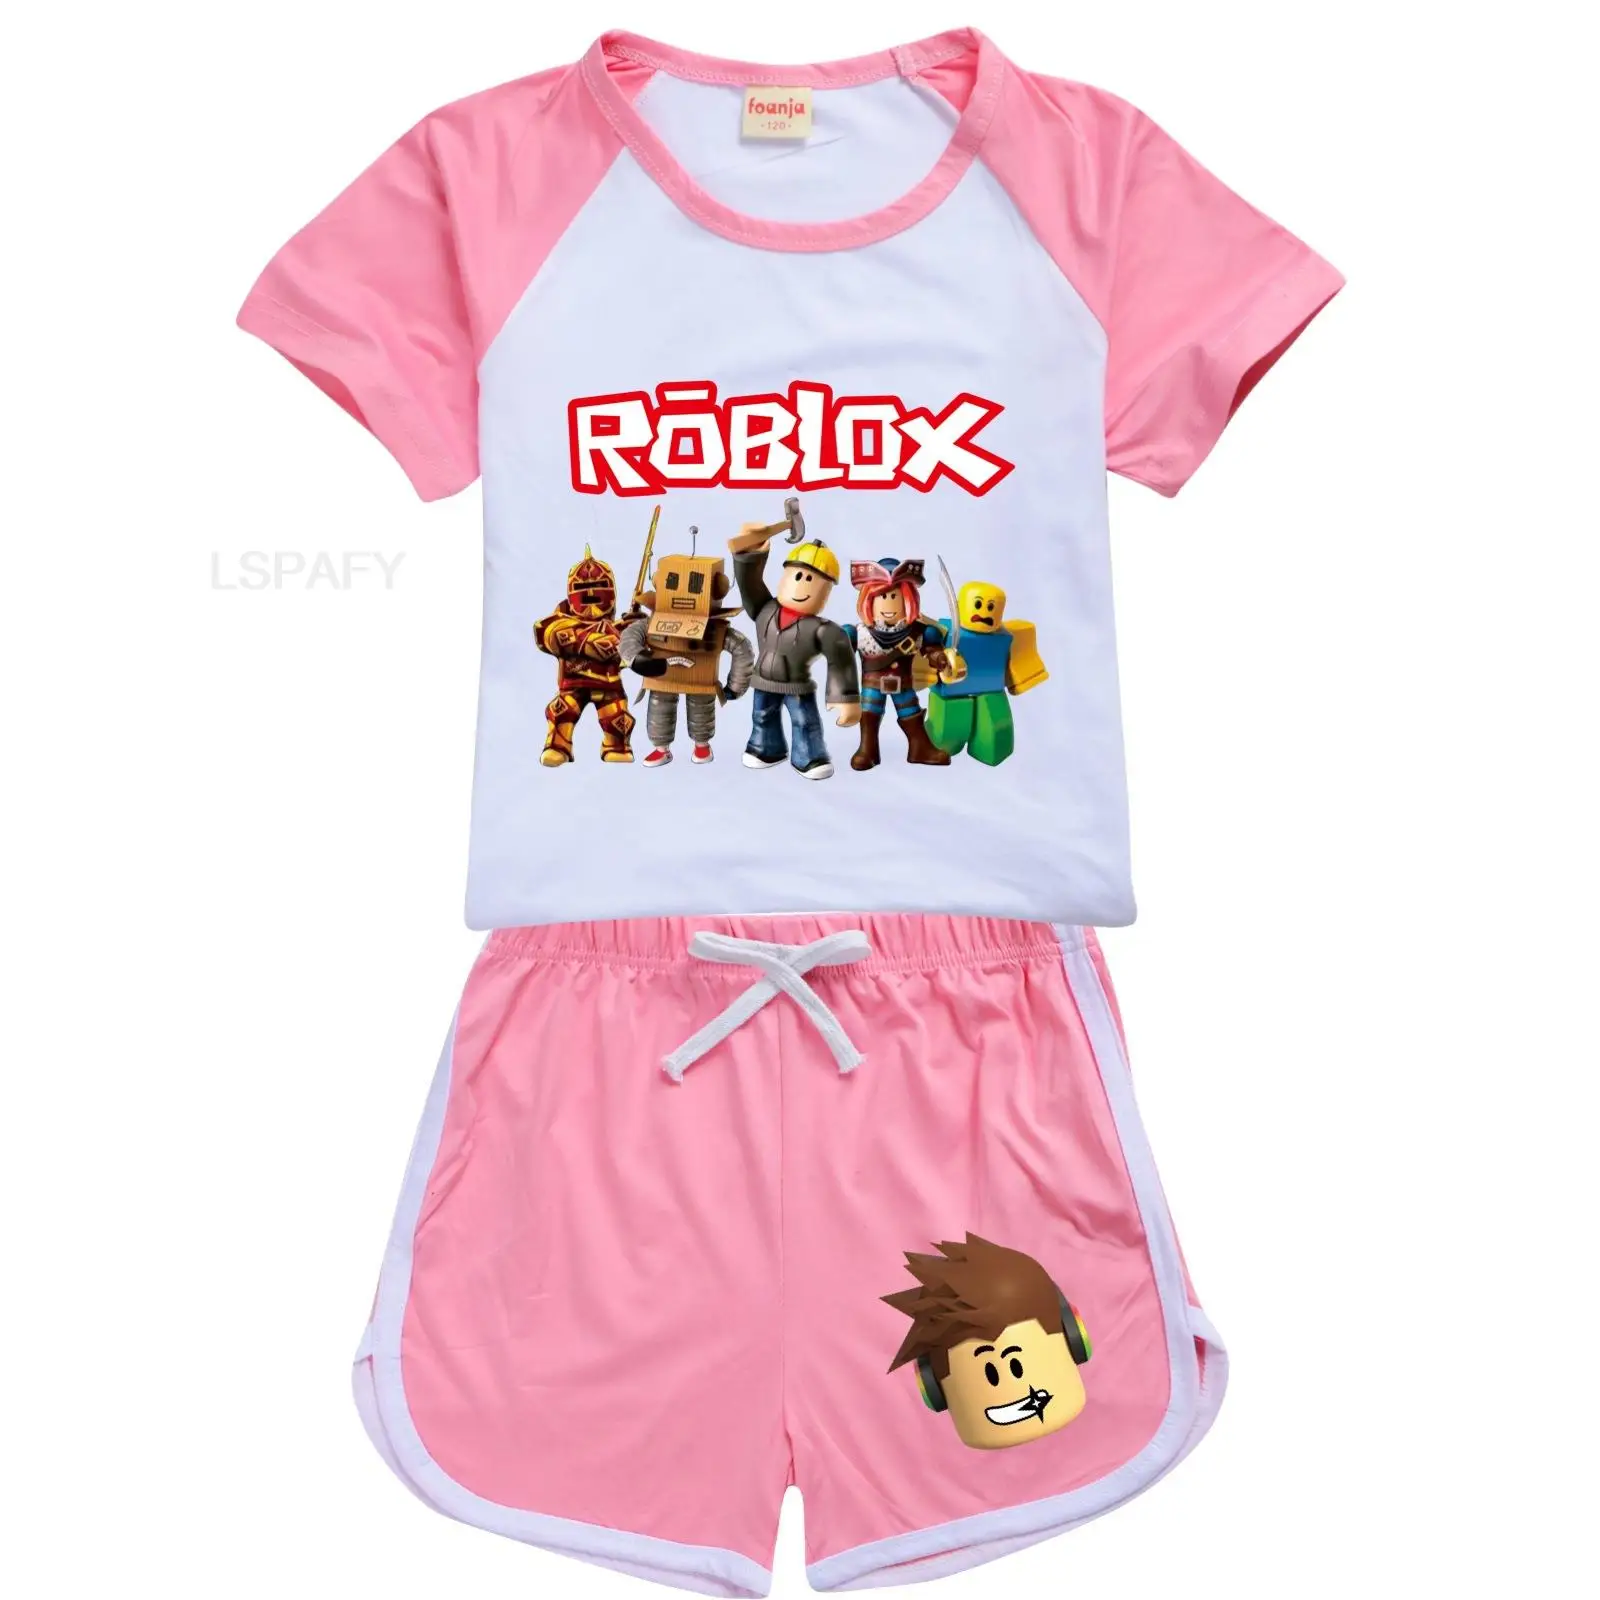 NIP Girls Boys ROBLOX T-shirt & Shorts Summer Outfit Set - size 7